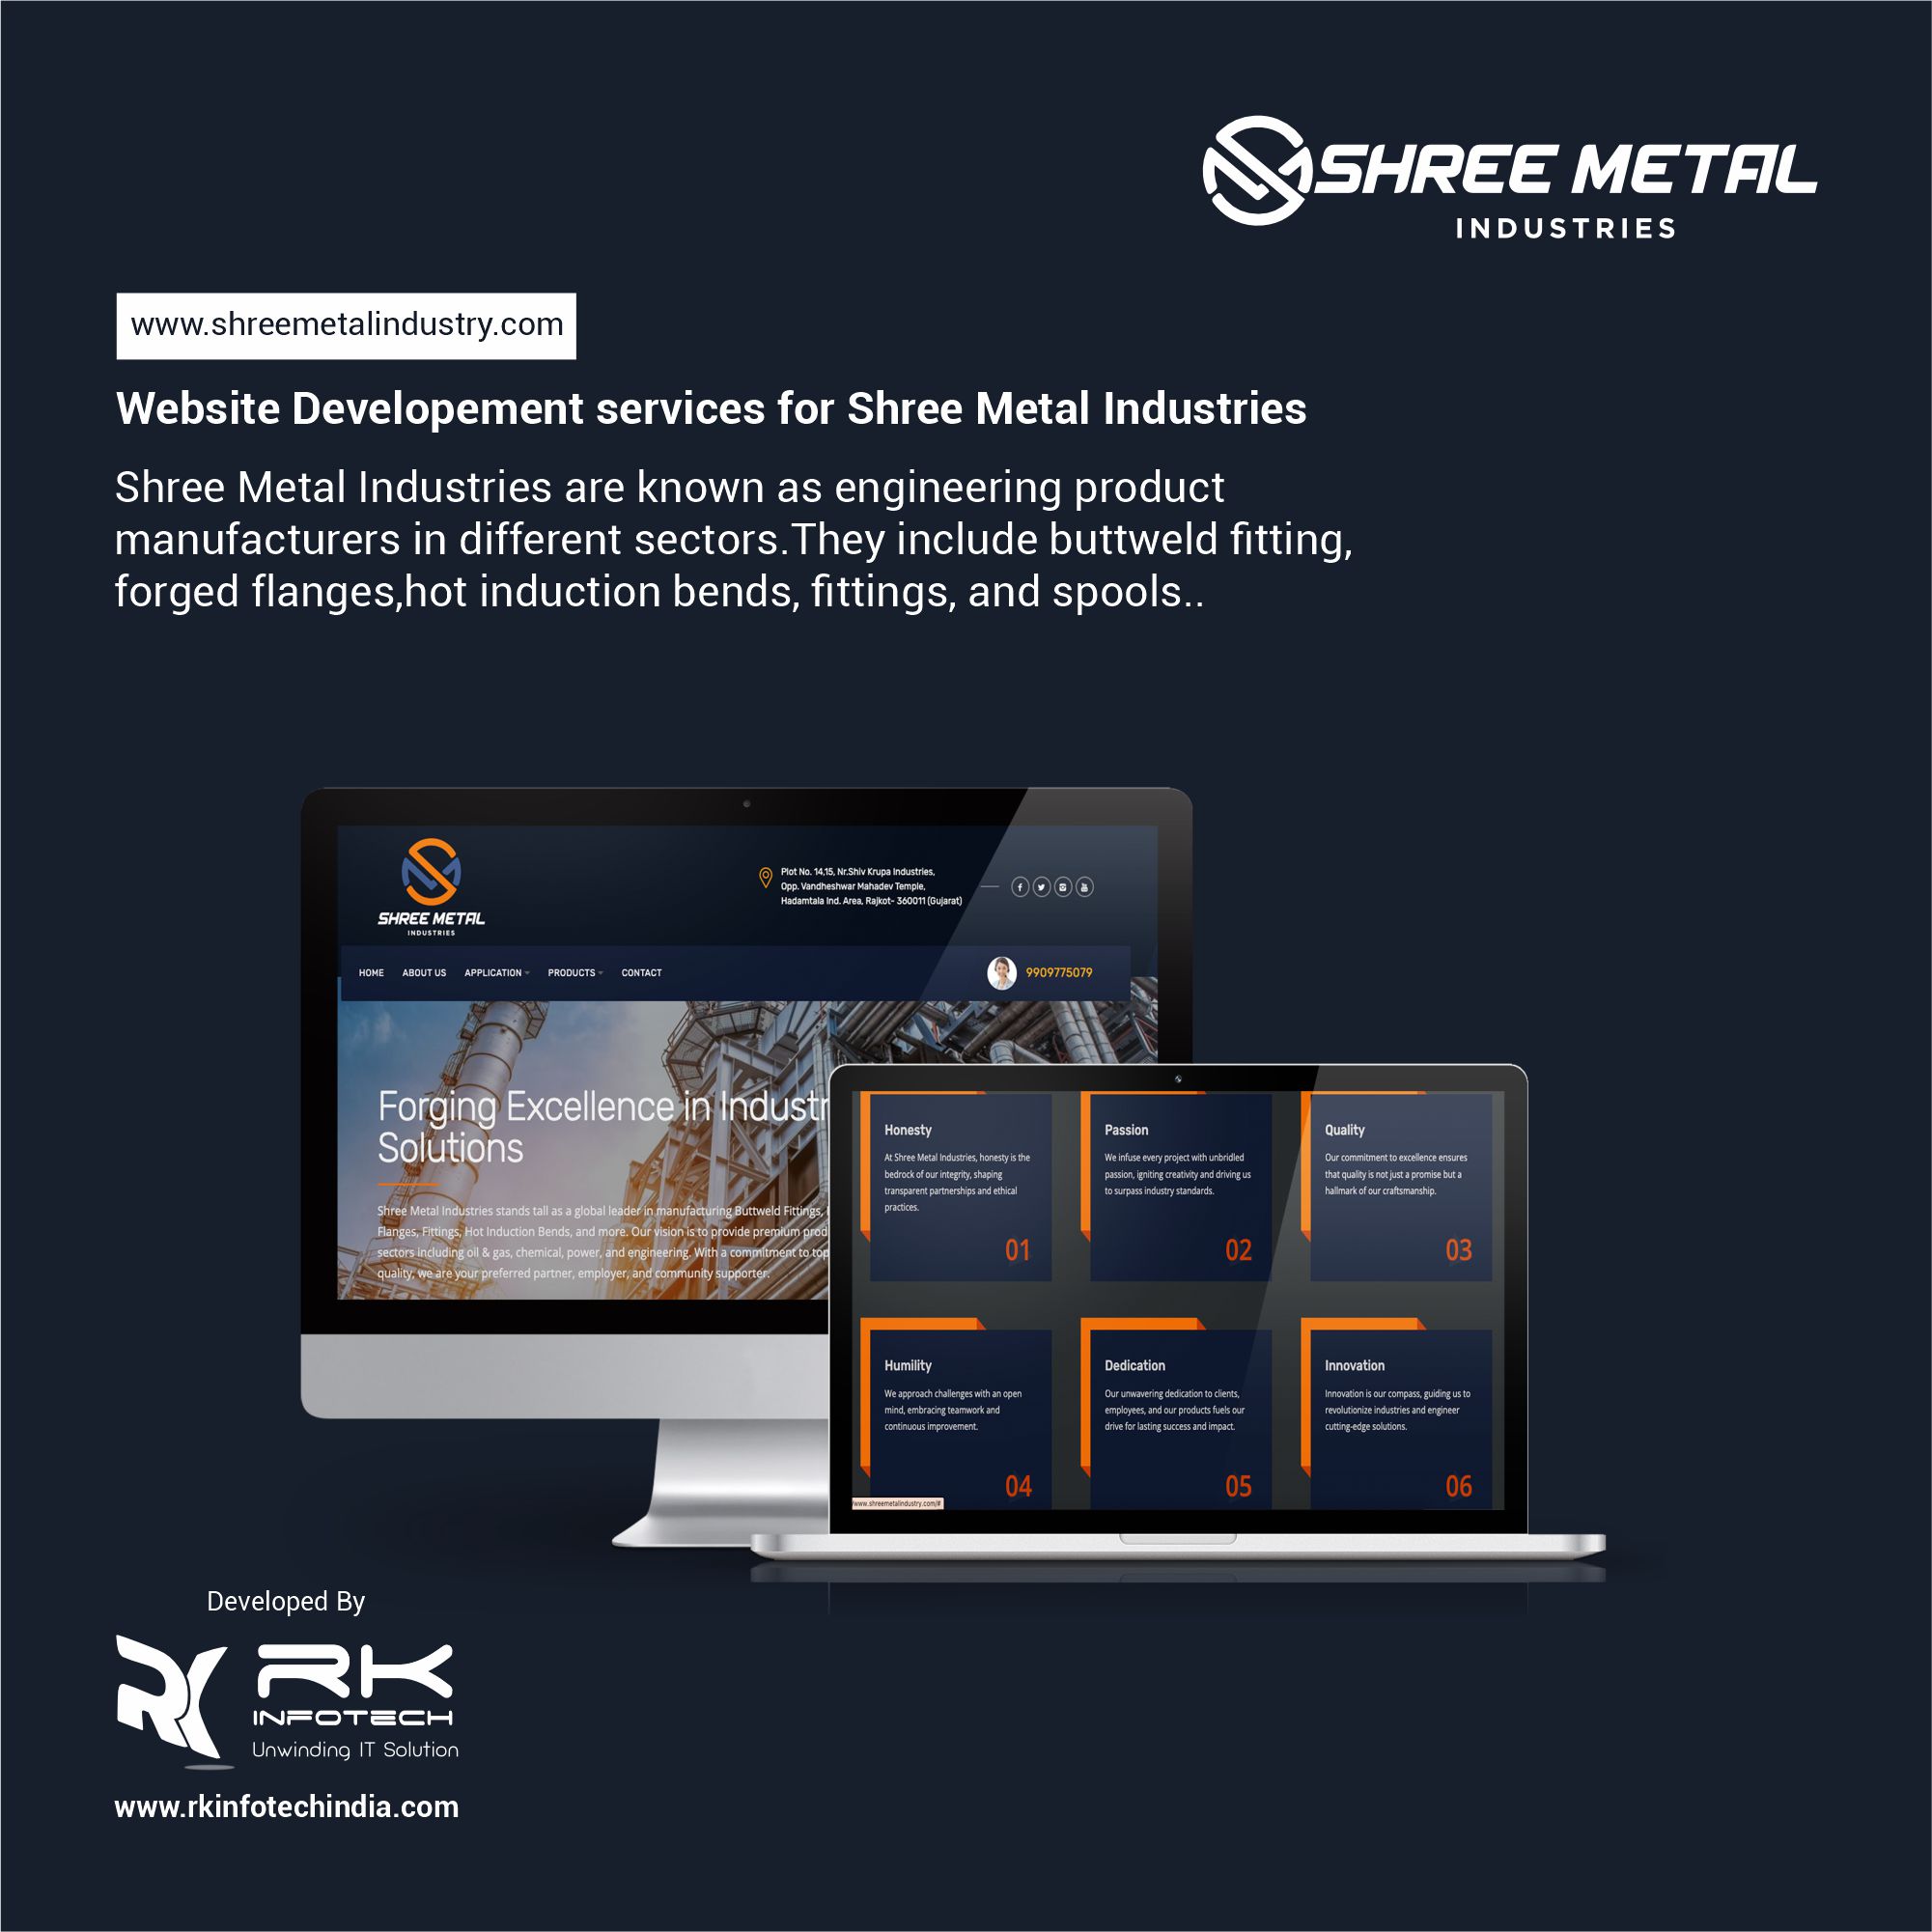 Shree Metal Industries